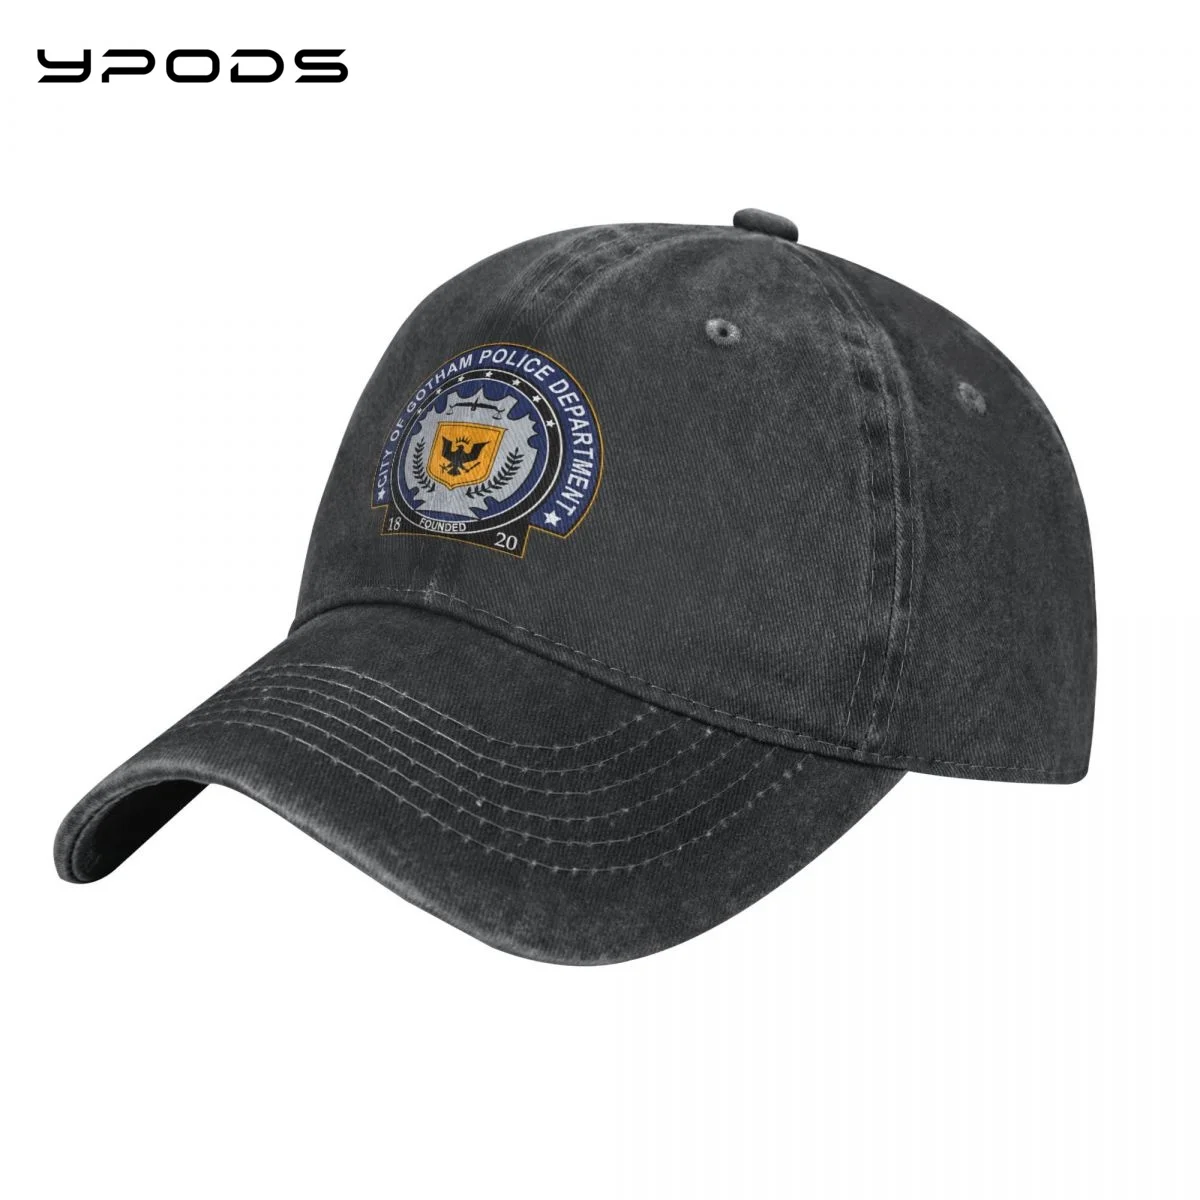 

Gotham City Police Baseball Caps for Men Women Vintage Washed Cotton Dad Hats Print Snapback Cap Hat